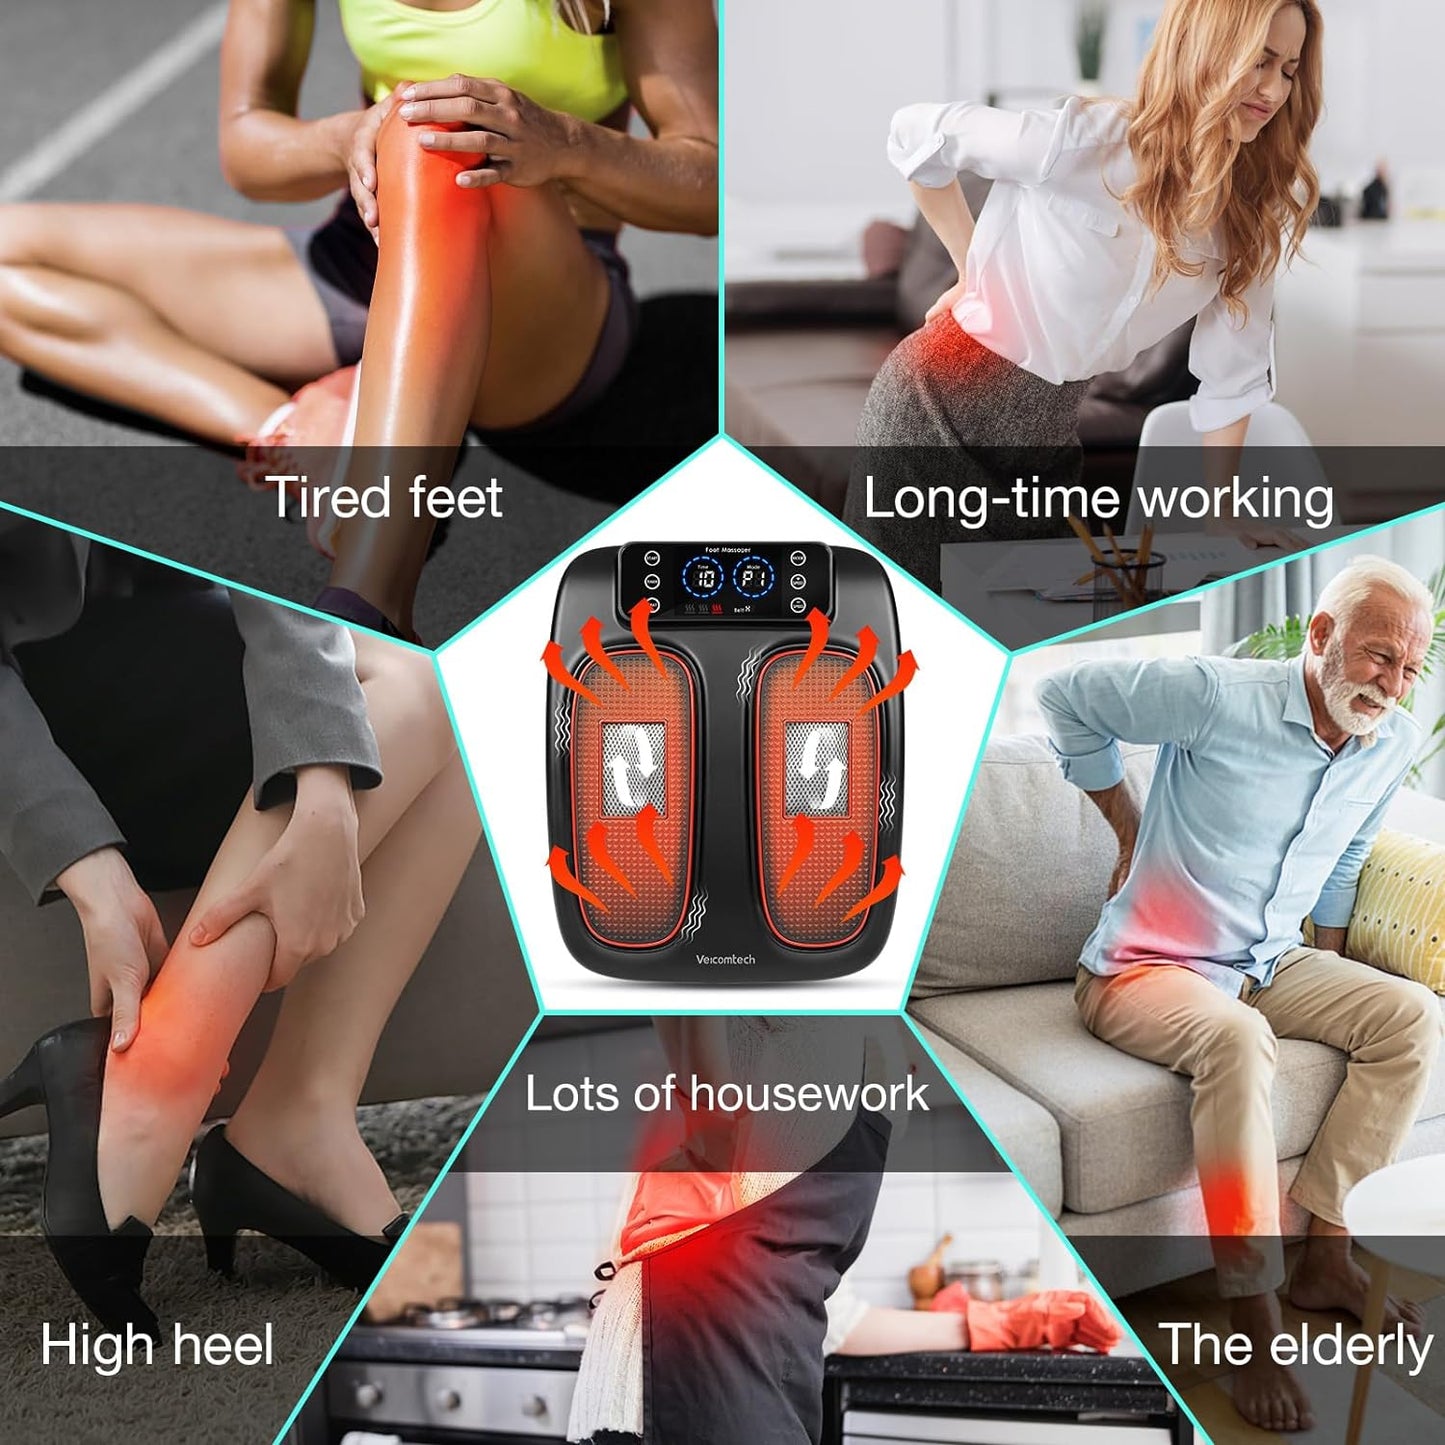 Electric Leg Foot Massager, Shiatsu Foot Massager with Heat, Heating Waist Belt Effective for Pain Relief, 3 Massage Modes 10 Intensity Levels for Back Leg Foot